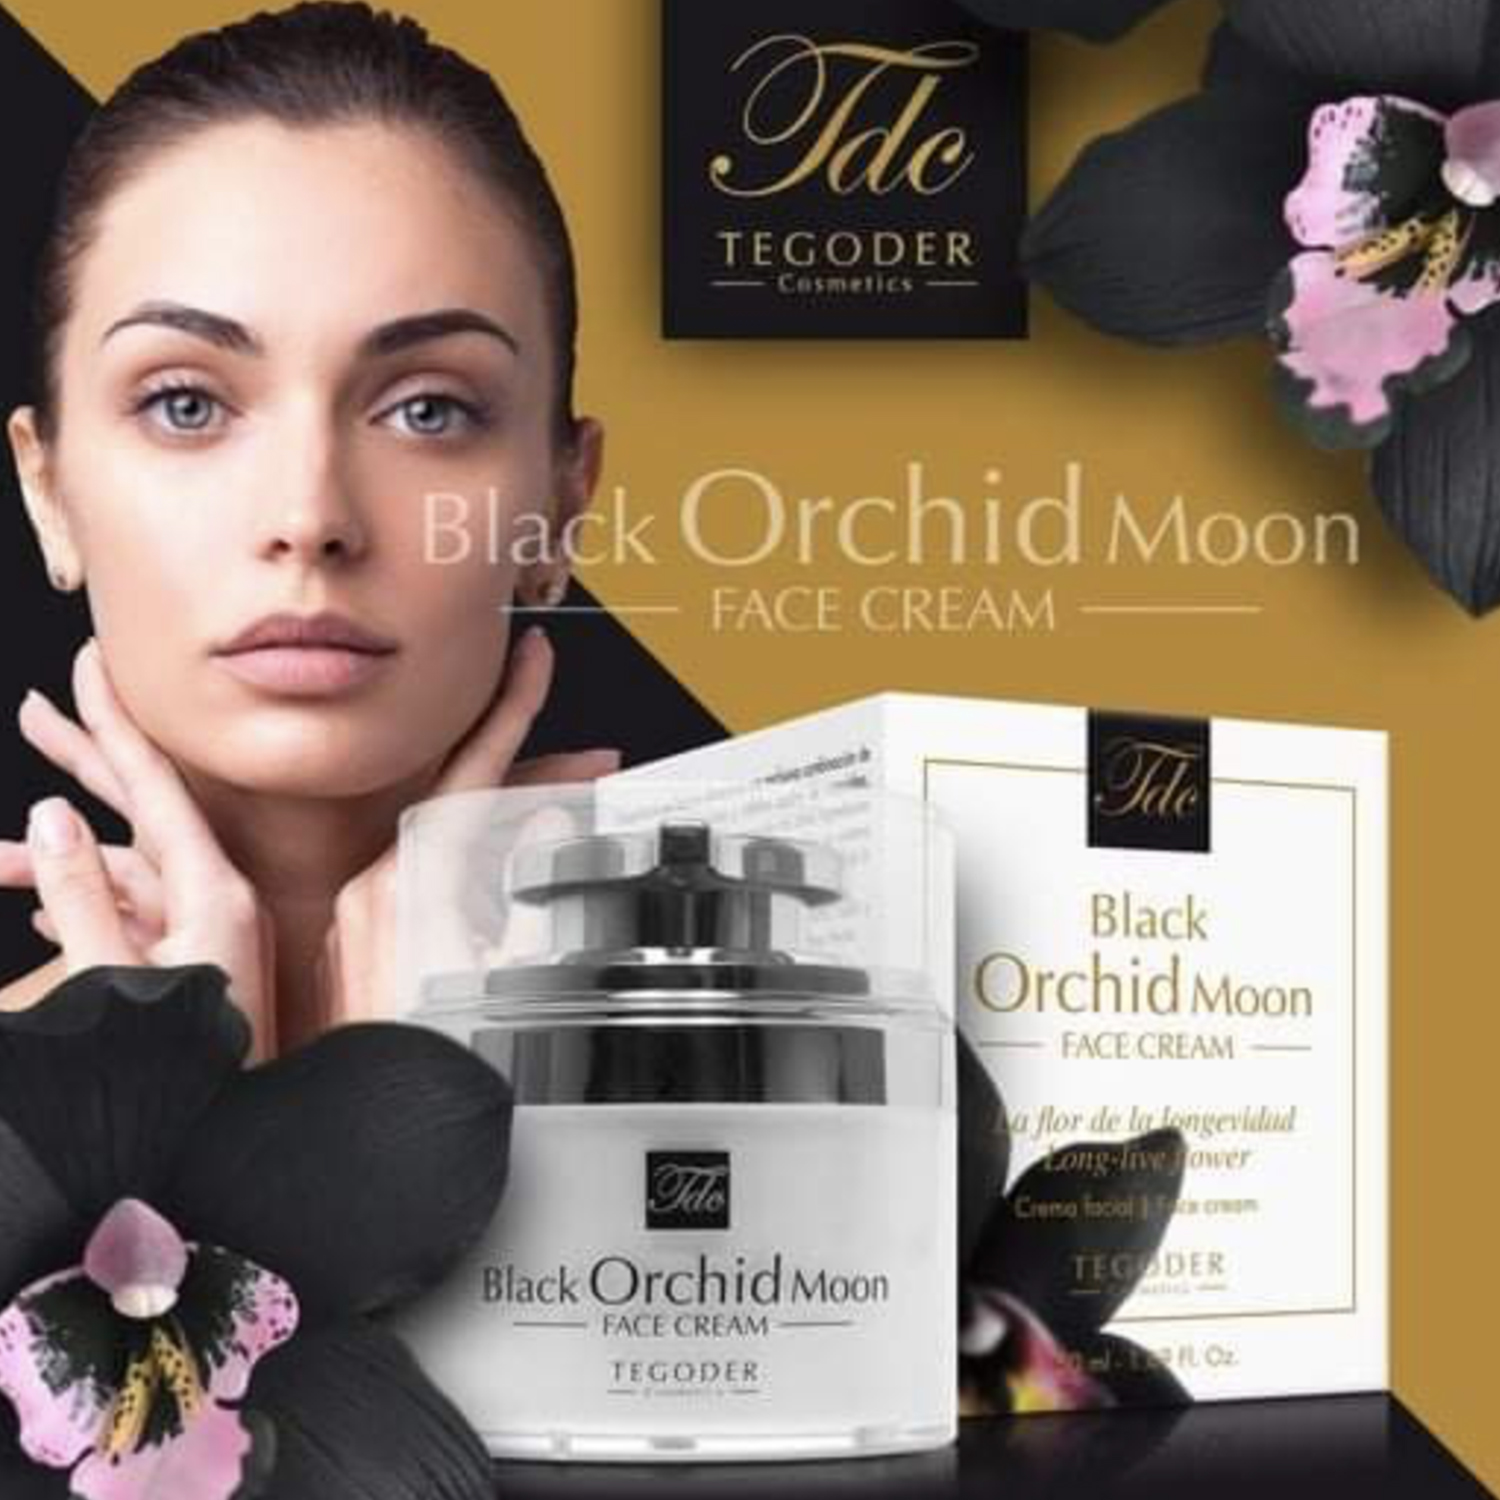 Tegoder月夜黑蘭幹細胞面霜 - Black Orchid Moon Face Cream